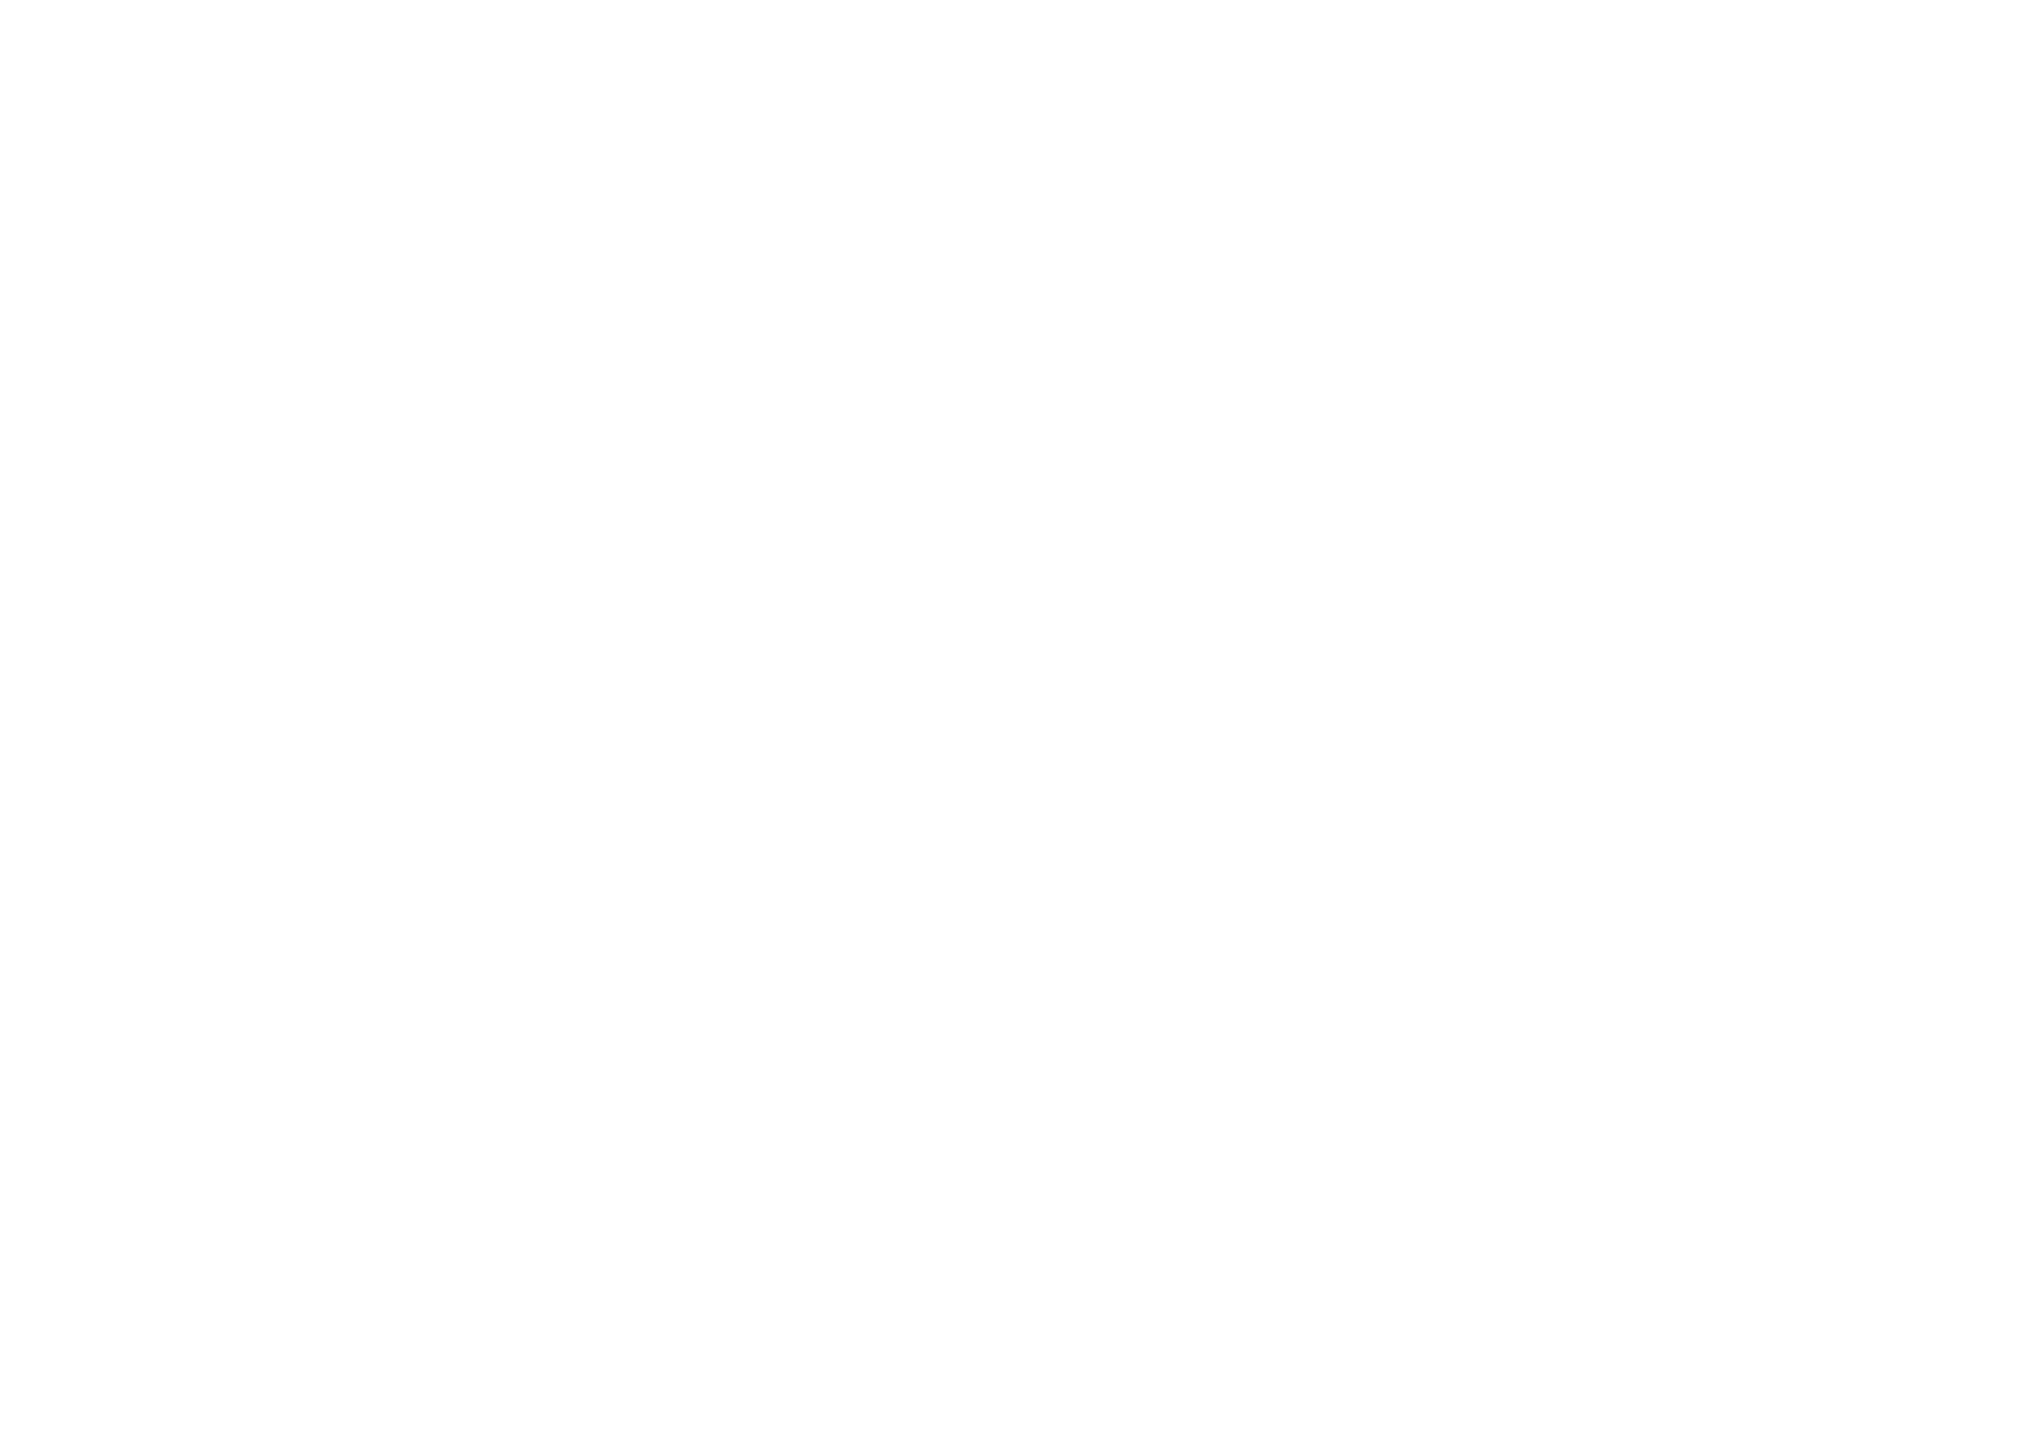 hawk-logo